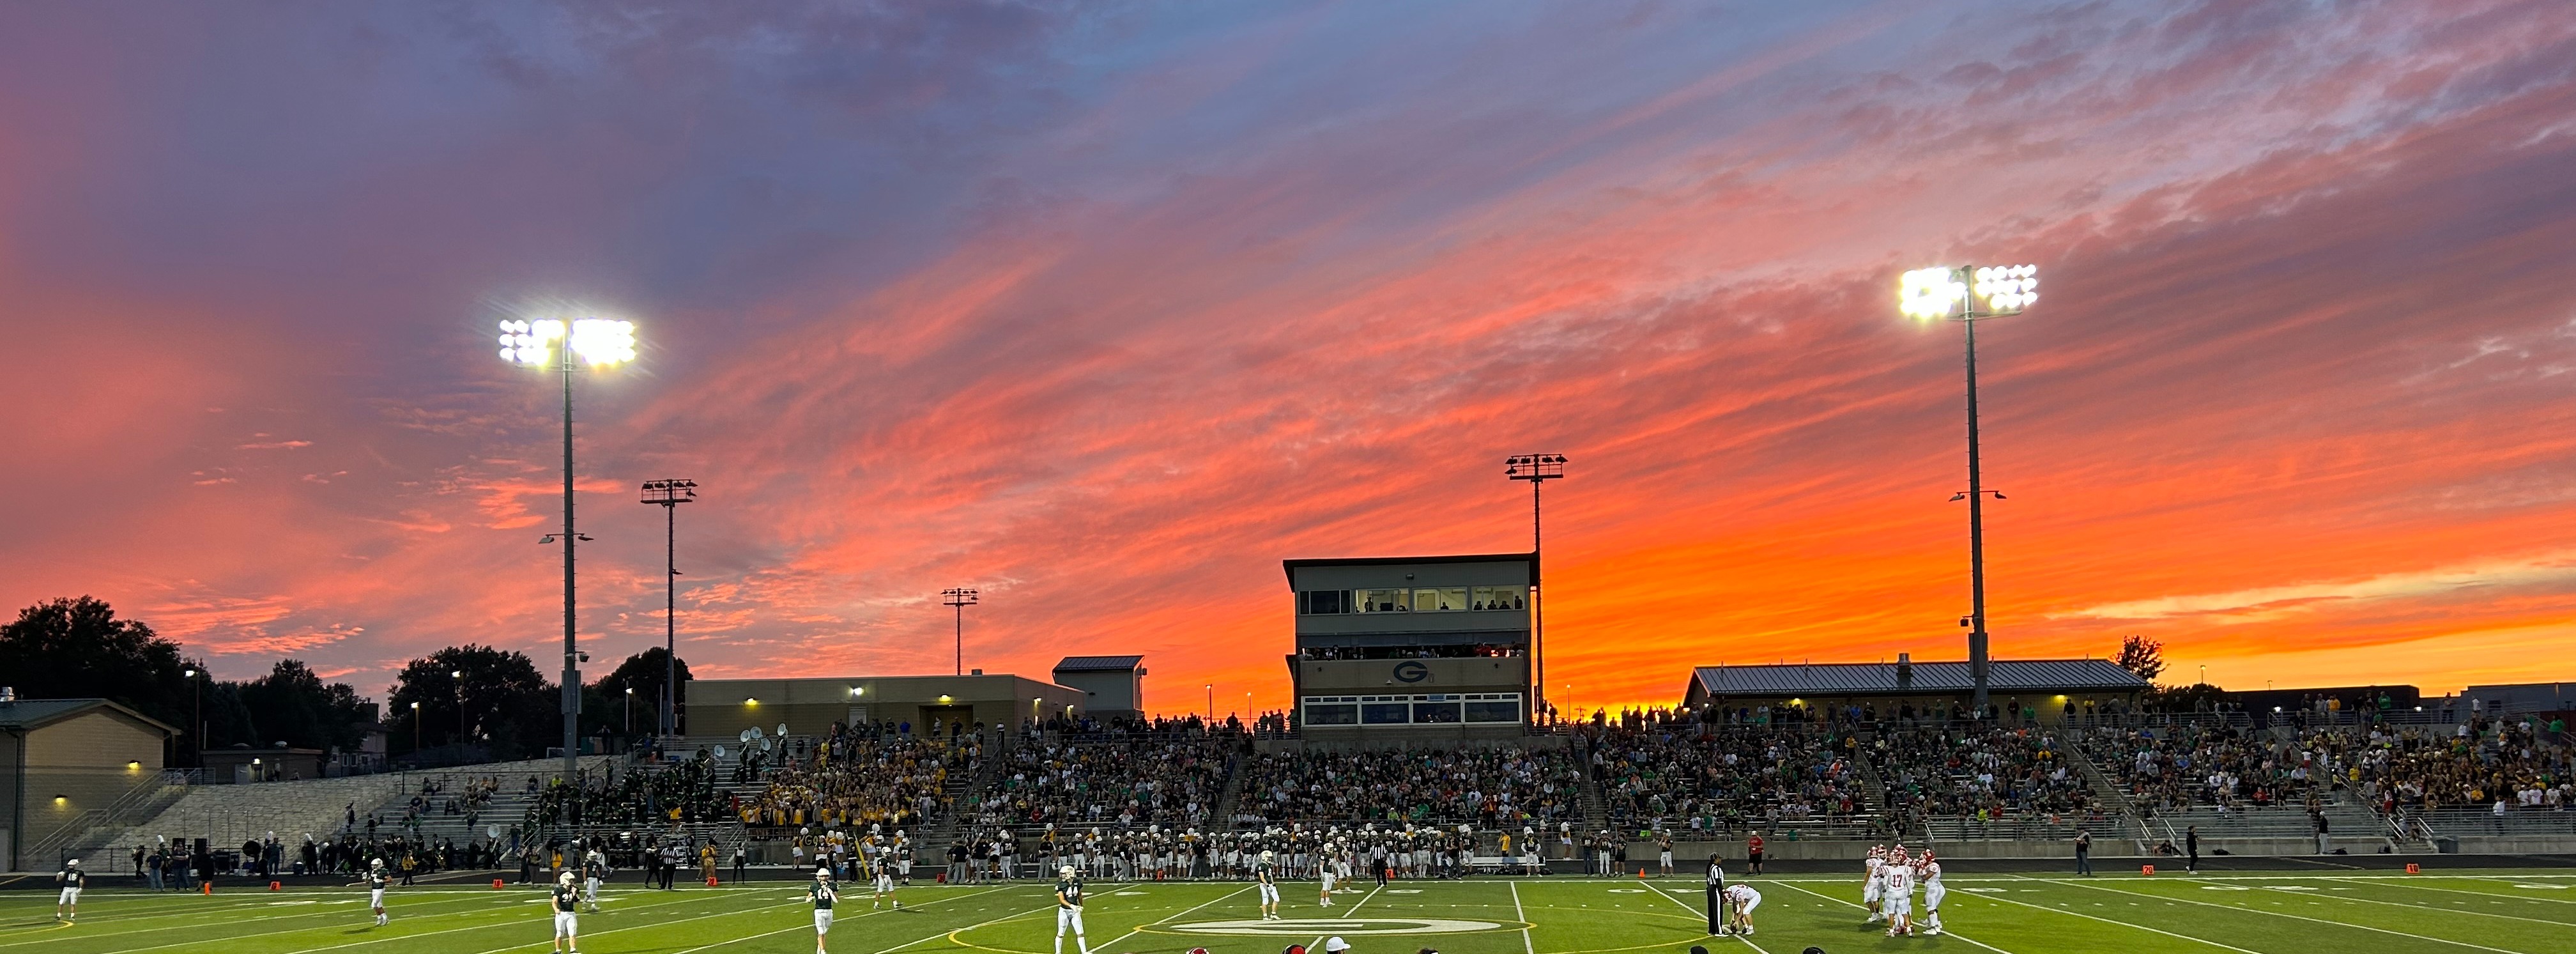 Sunset over Gretna High School stadium during a football game.